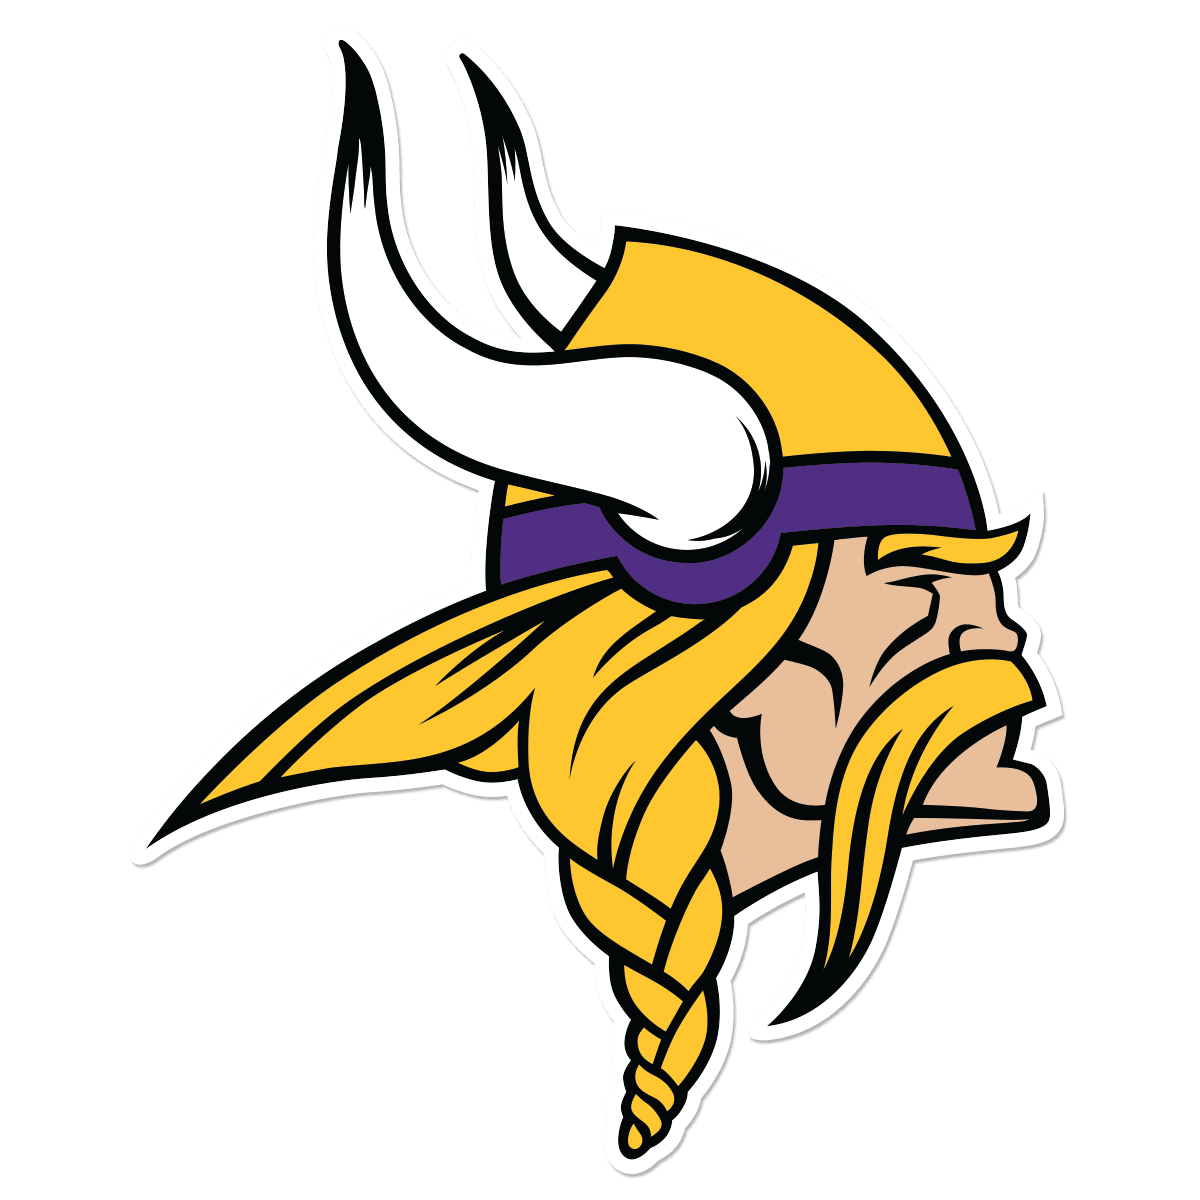 Логотип Minnesota Vikings.dxf